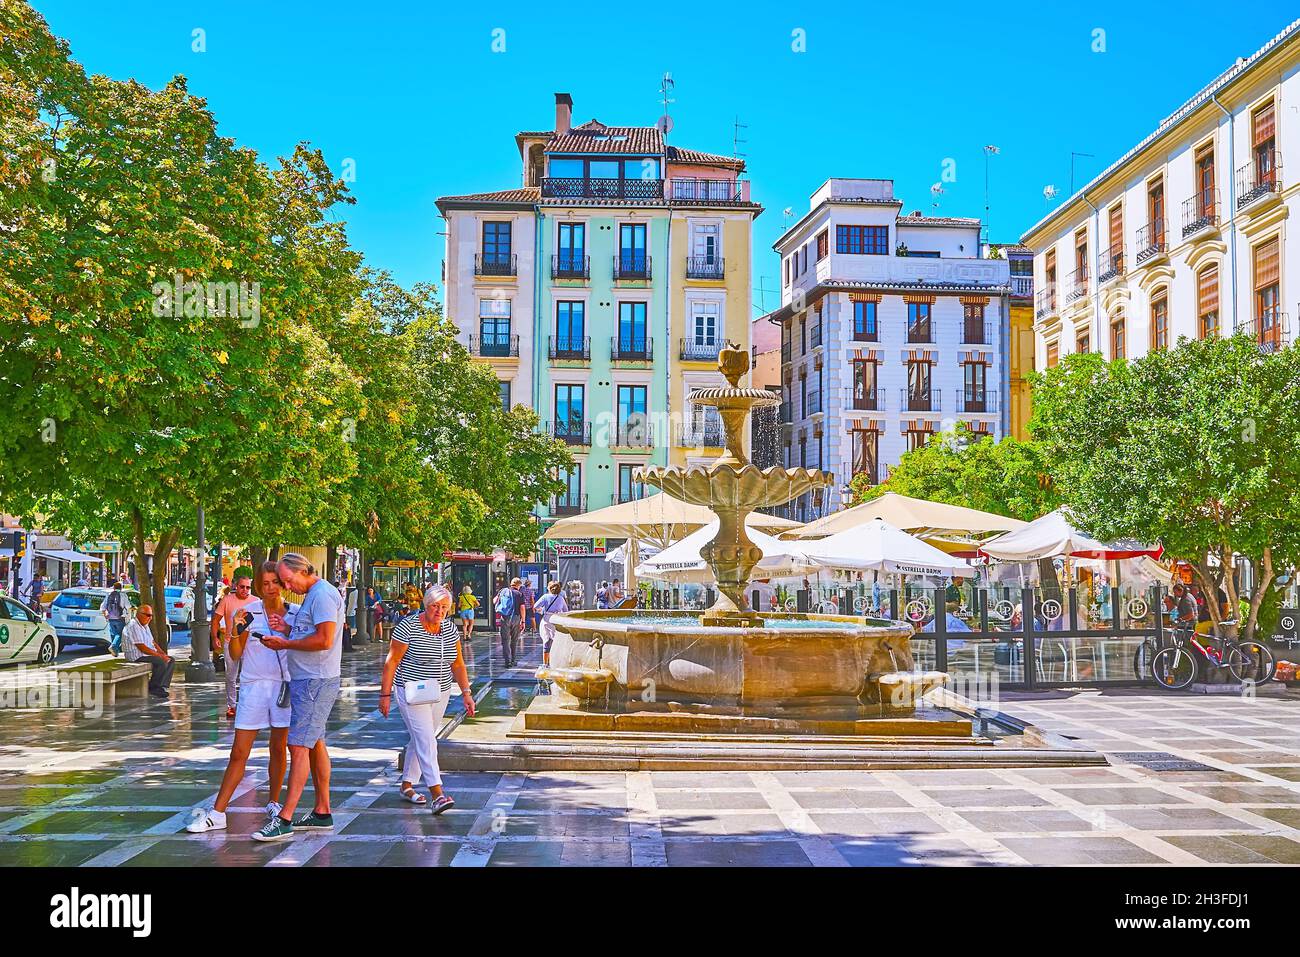 GRANADA, SPAIN - SEPTEMBER 27, 2019: Plaza Nueva square boasts ...